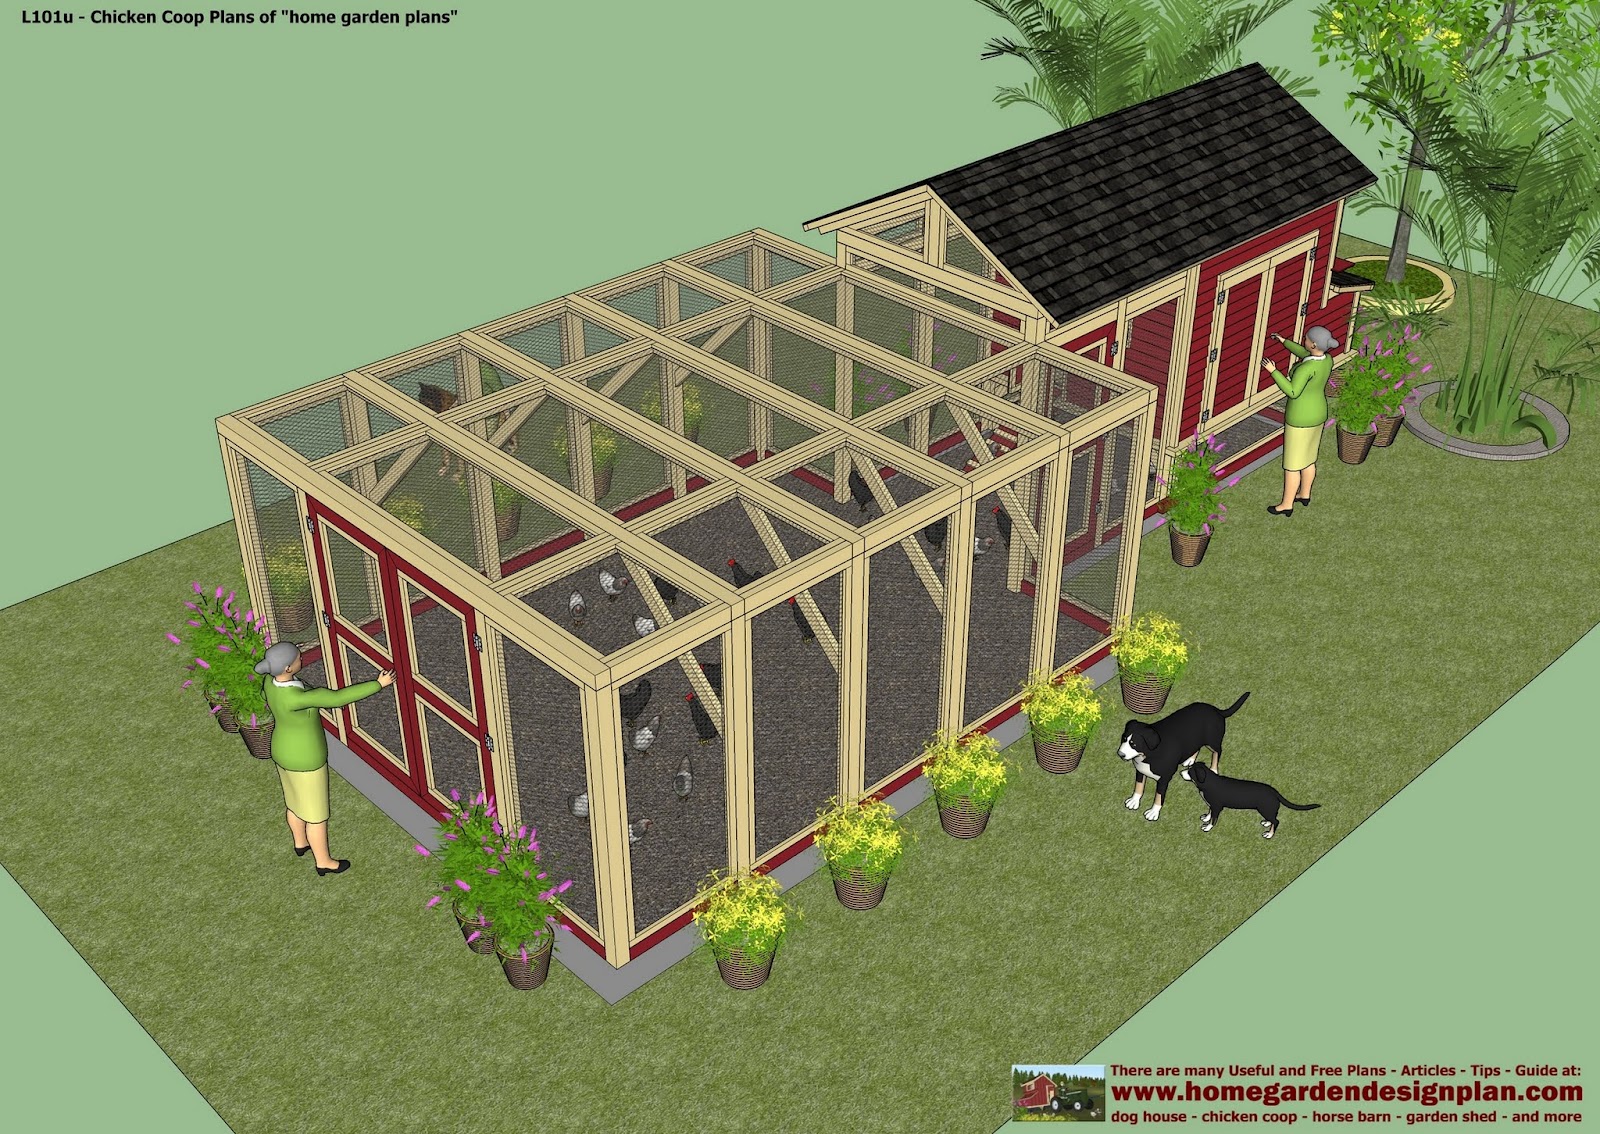 garden plans: L101 - Chicken Coop Plans Construction - Chicken Coop ...